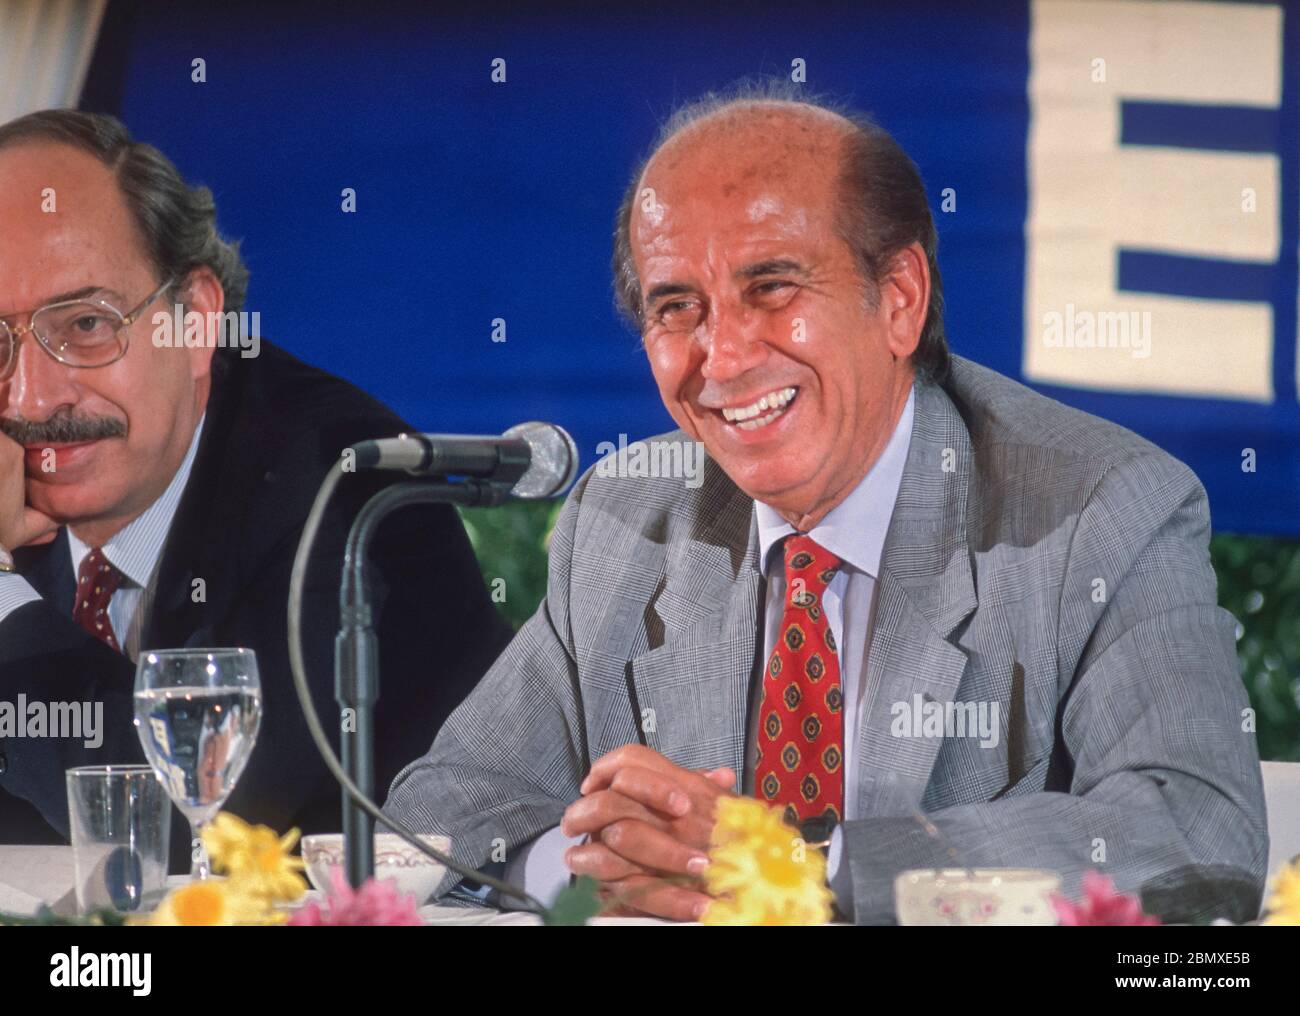 CARACAS, VENEZUELA, OKTOBER 1988 - Präsidentschaftskandidat Carlos Andres Perez während der Pressekonferenz. Stockfoto